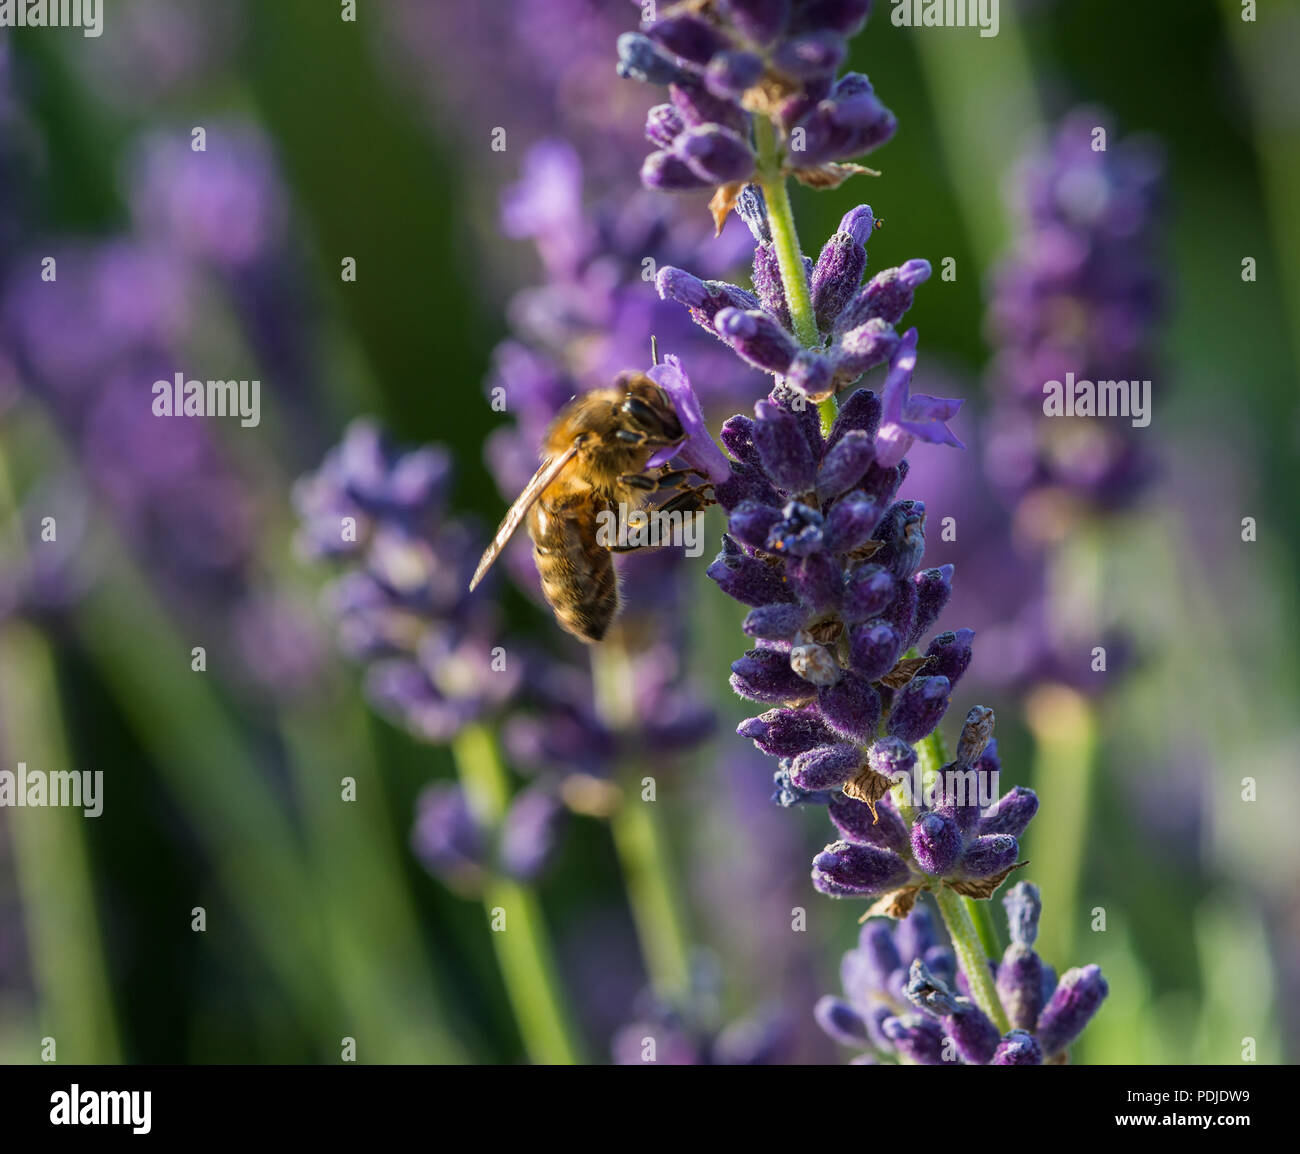 Una abeja recogiendo polen de una flor de lavanda Foto de stock